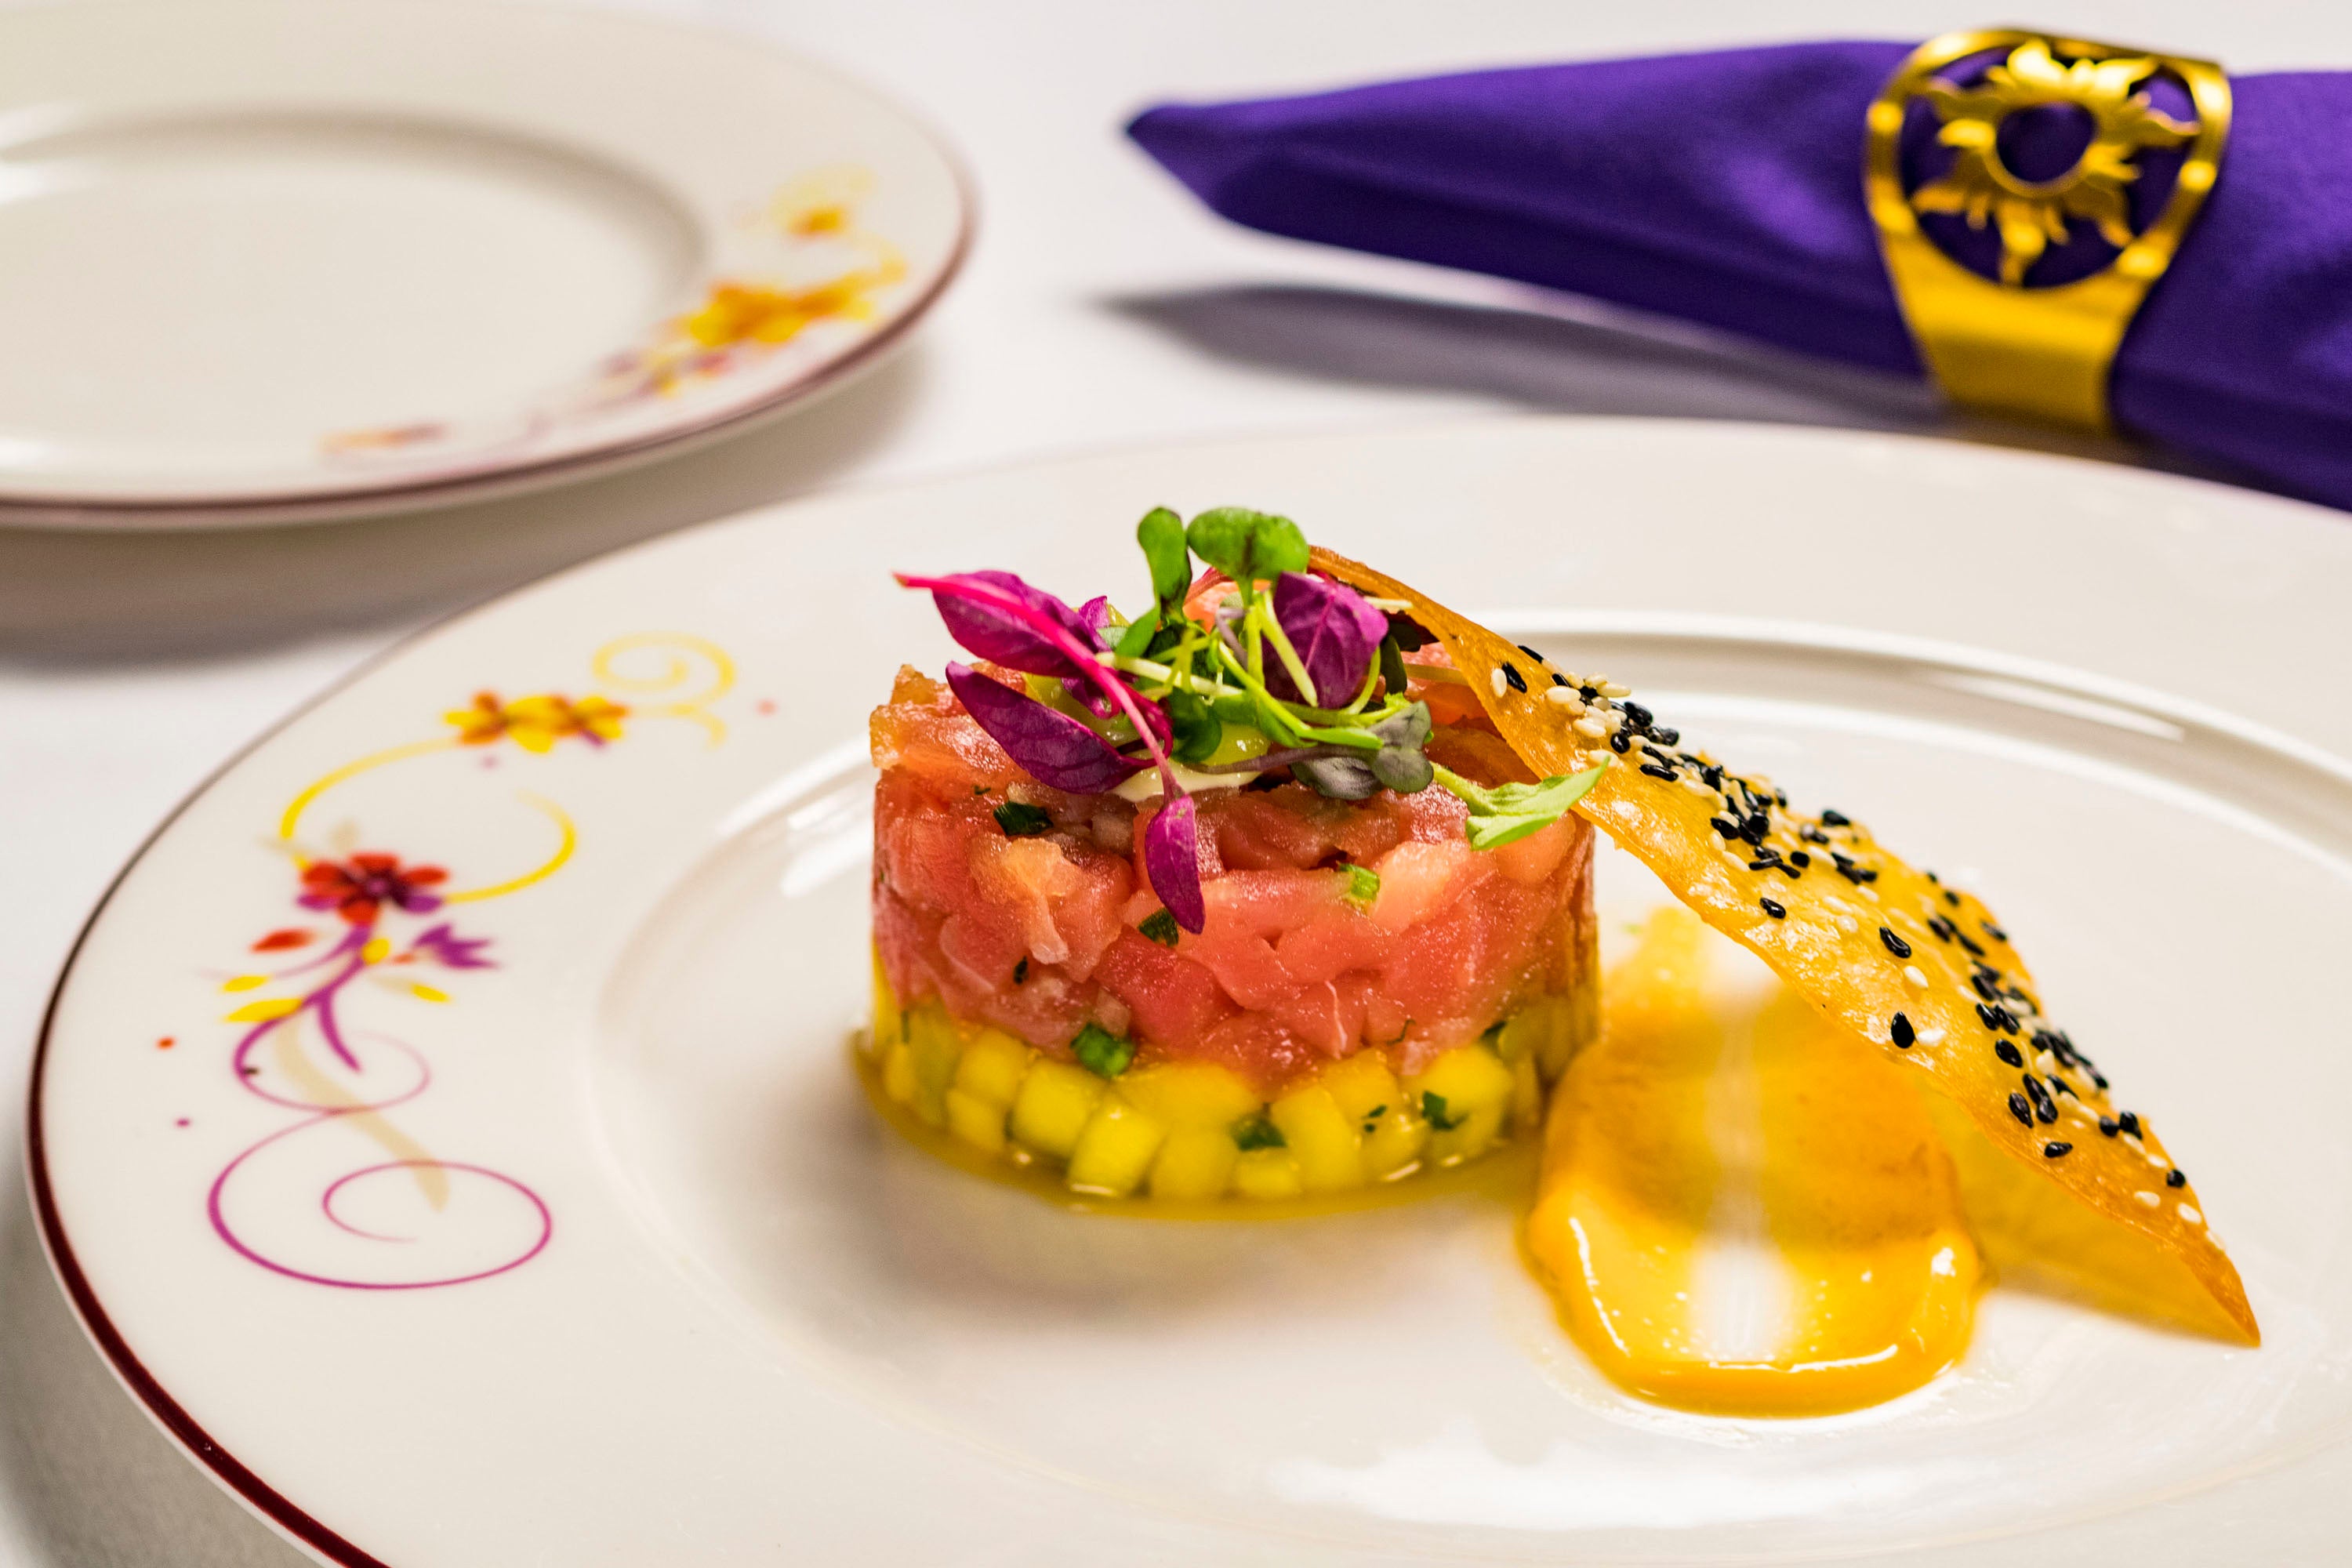 The Ahi tuna tartare appetiser at Rapunzel’s Royal Table on the Disney Magic (PA/Disney Cruise Line/Matt Stroshane)